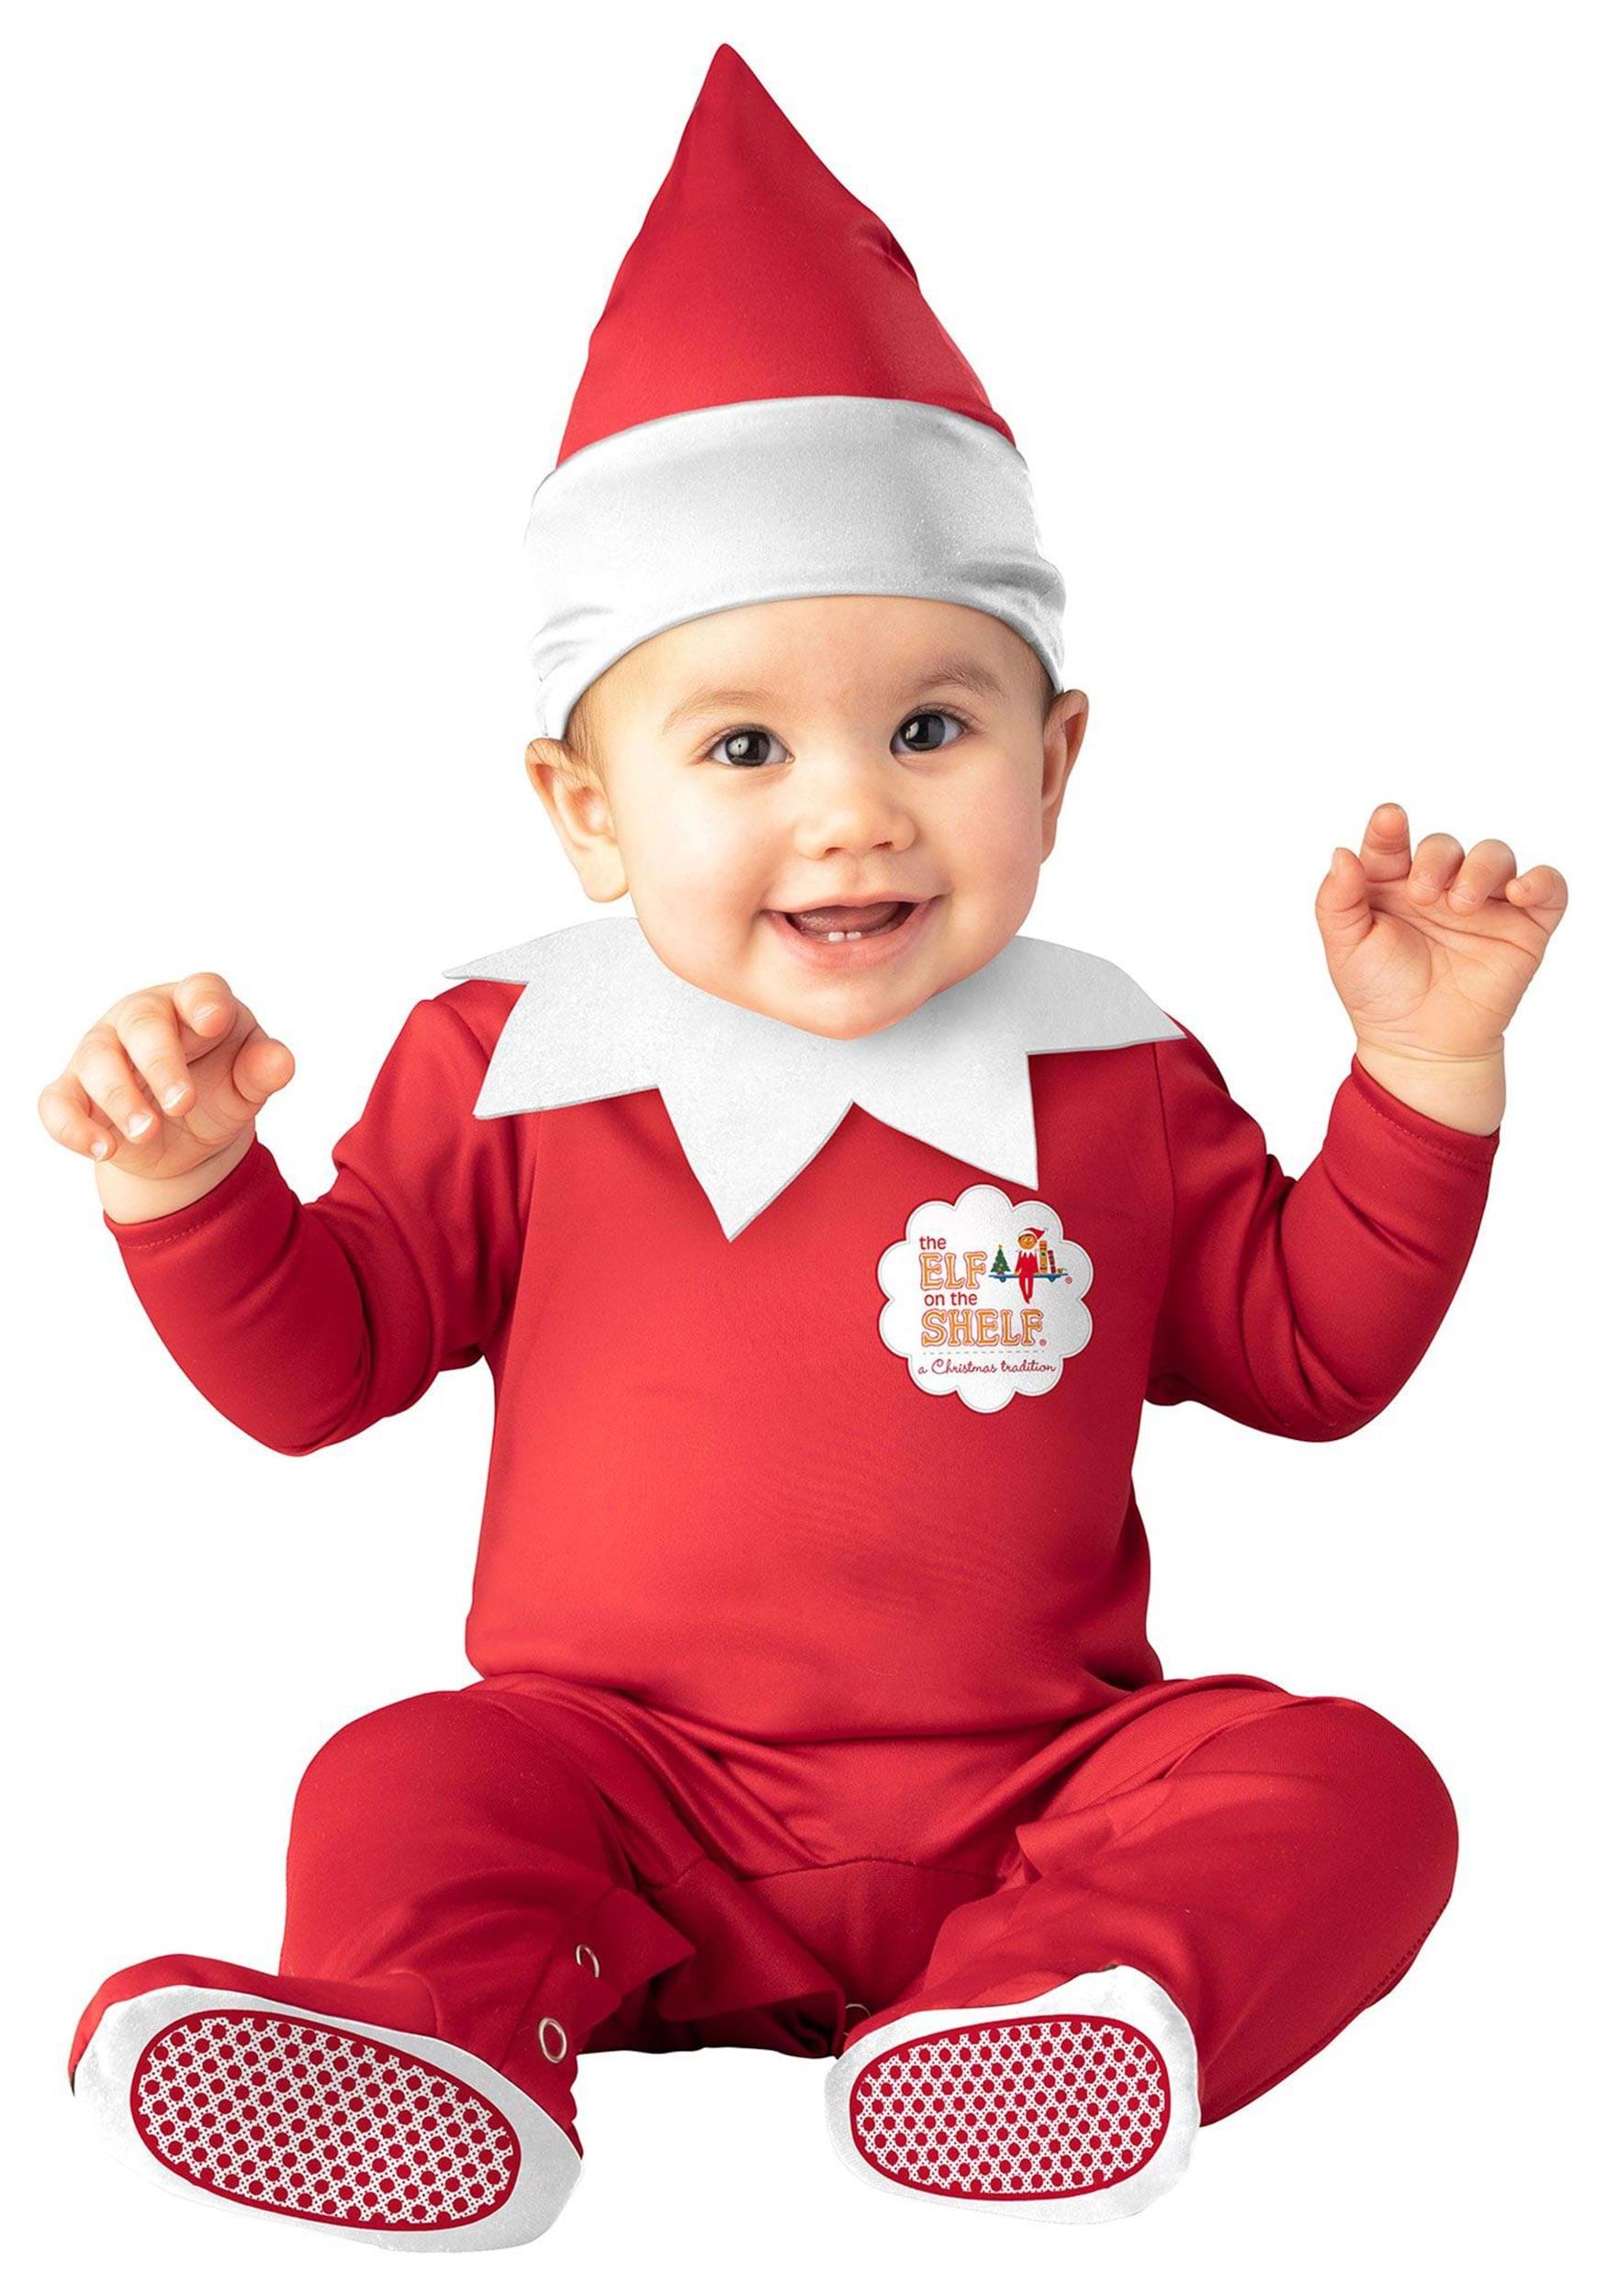 Photos - Fancy Dress ELF Fun World  on the Shelf Boy's Infant Costume Red/White FU7961 